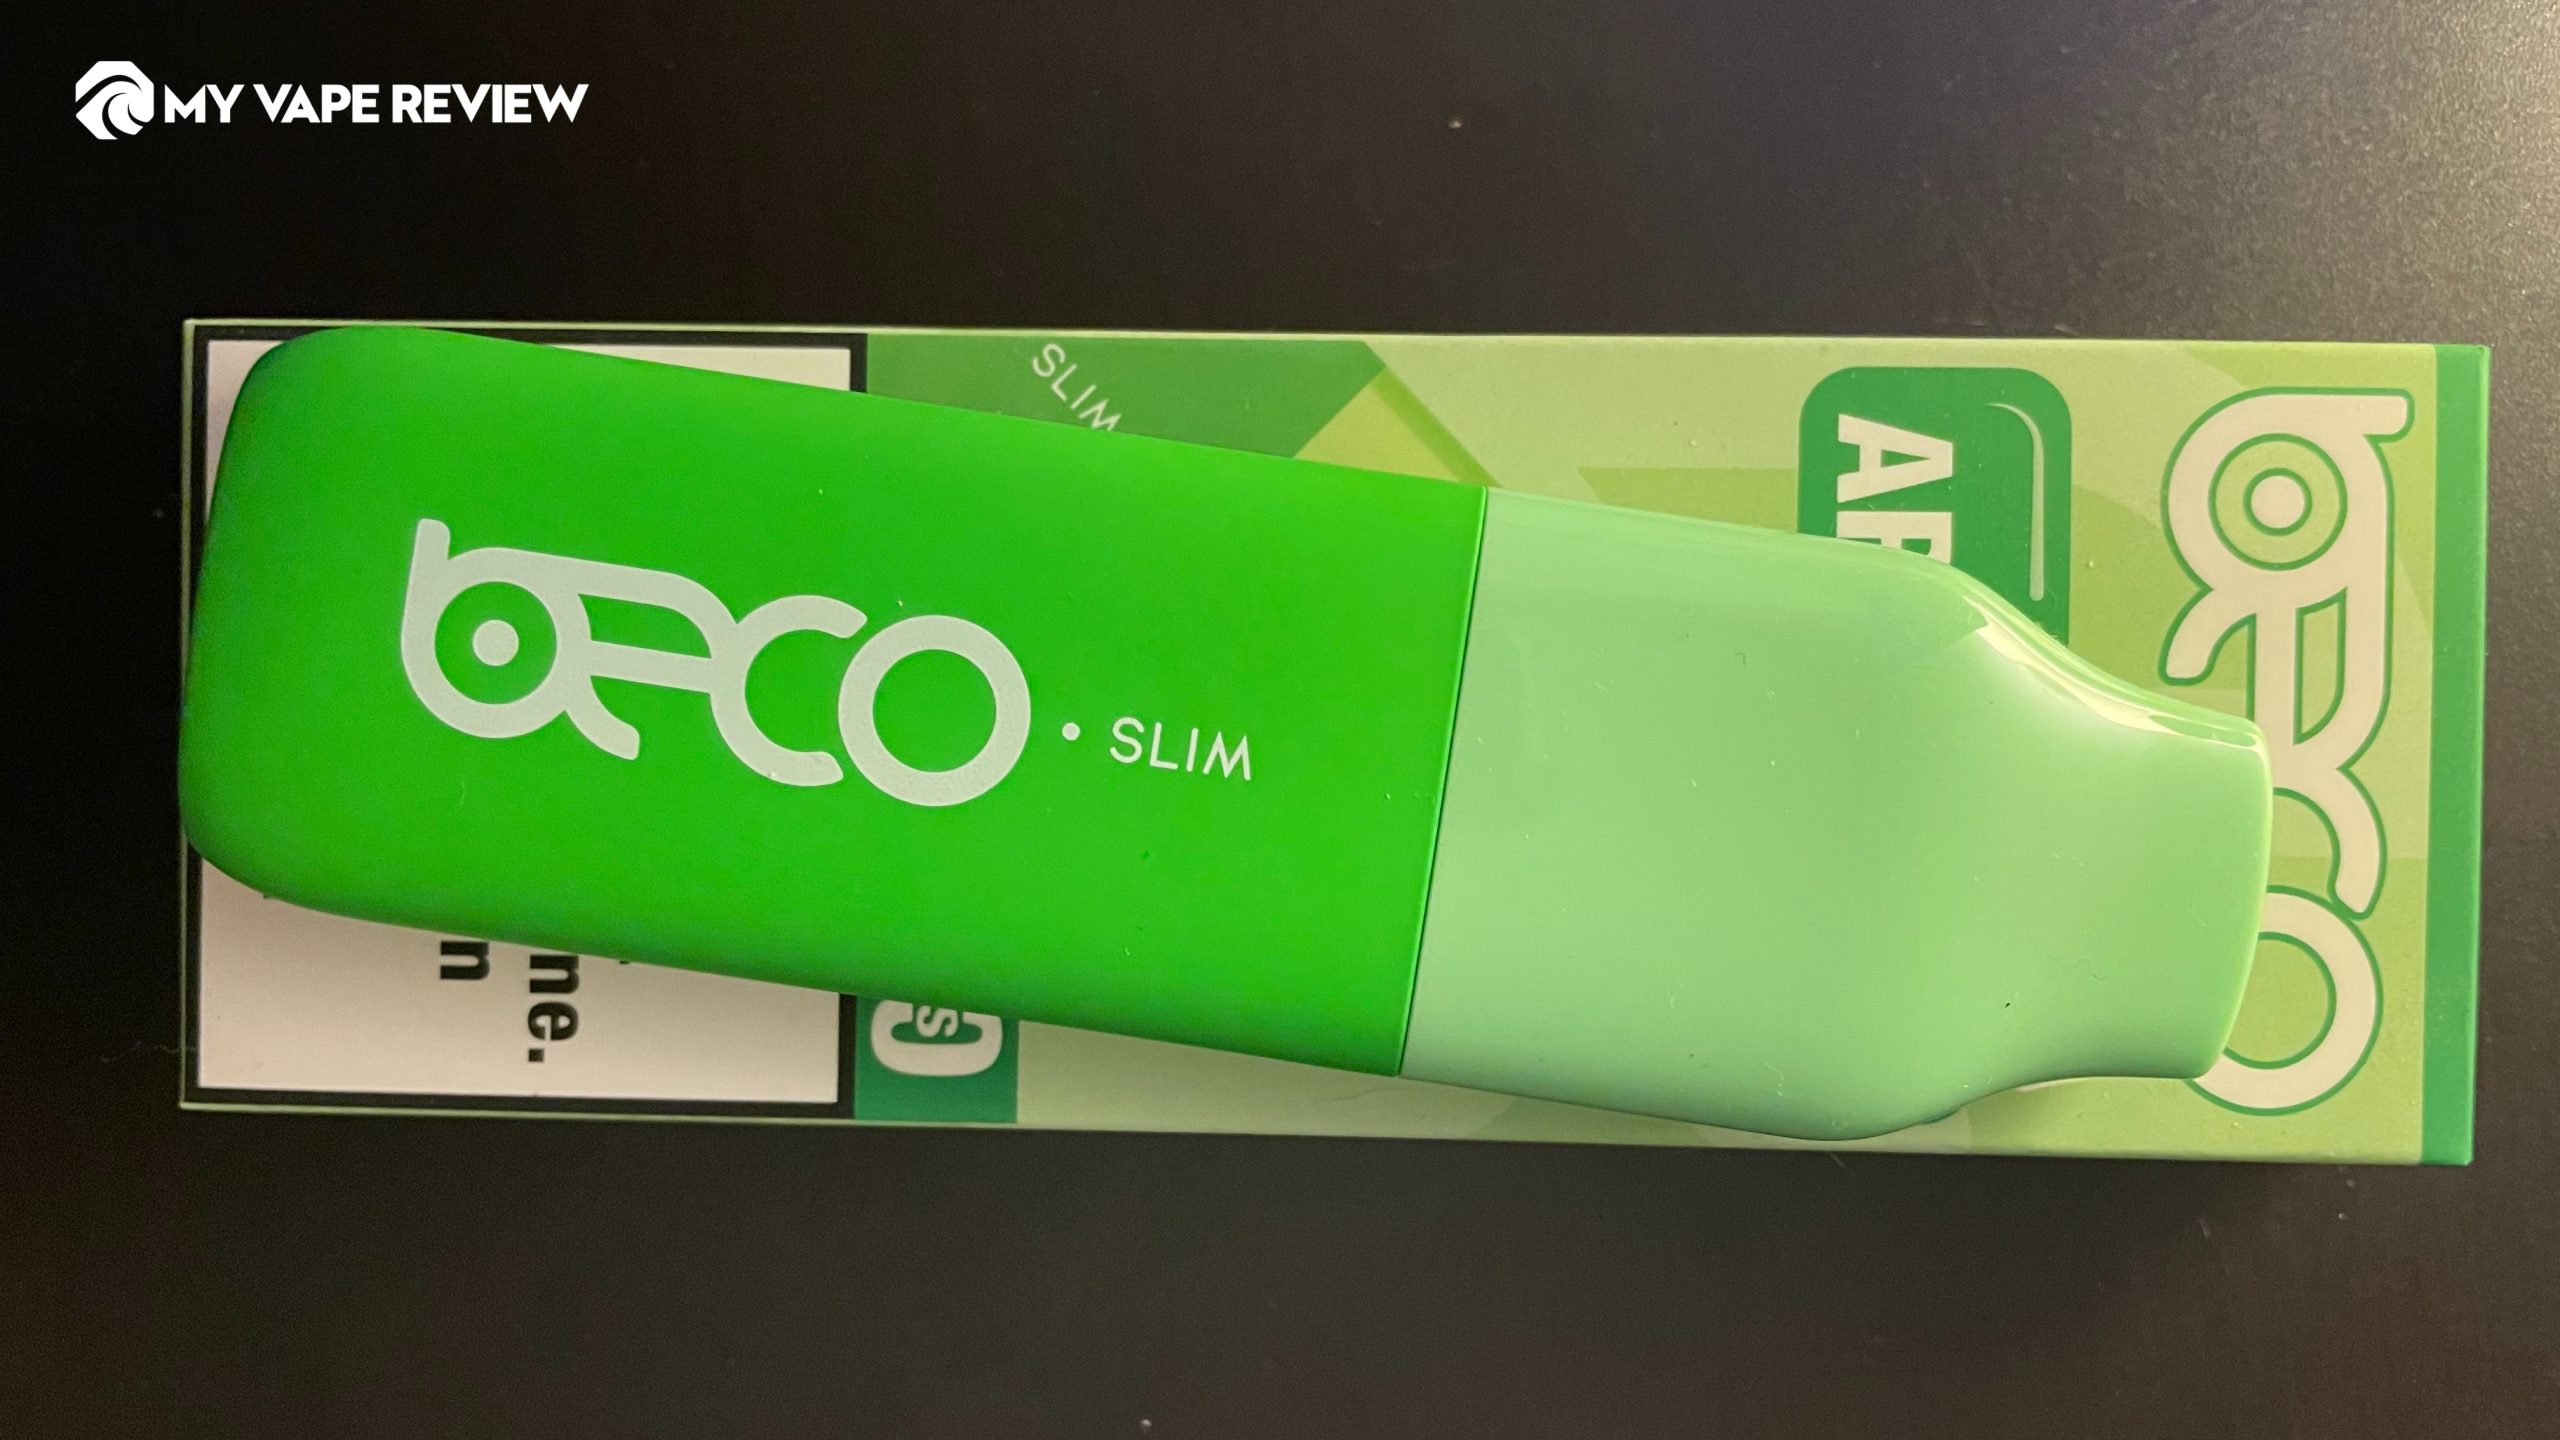 Beco Slim Disposable Vape Kit design scaled